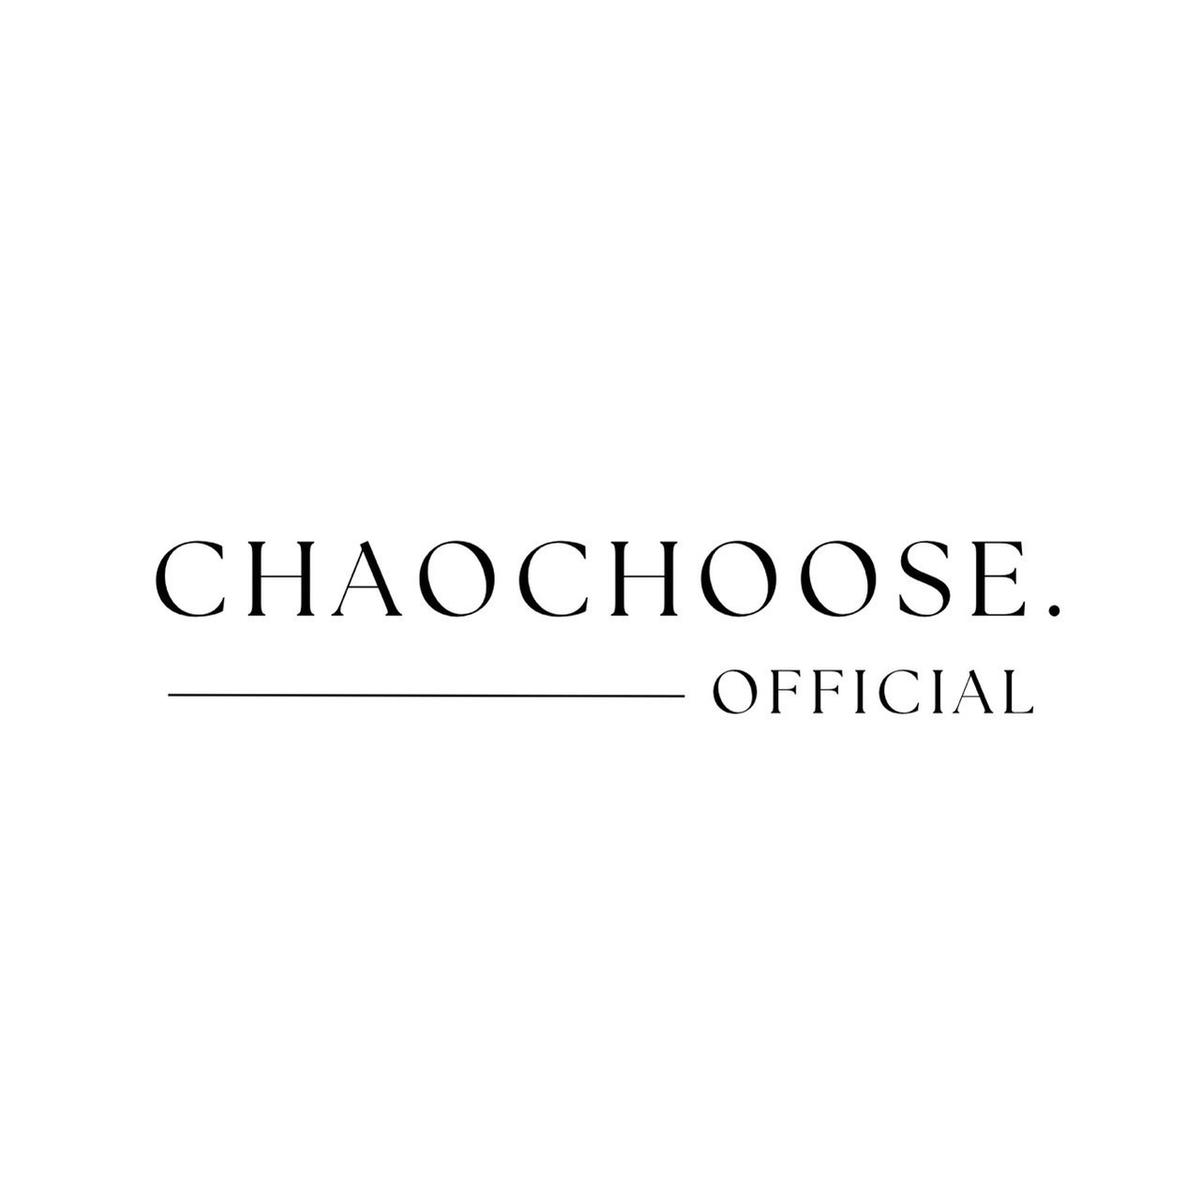 Chaochoose